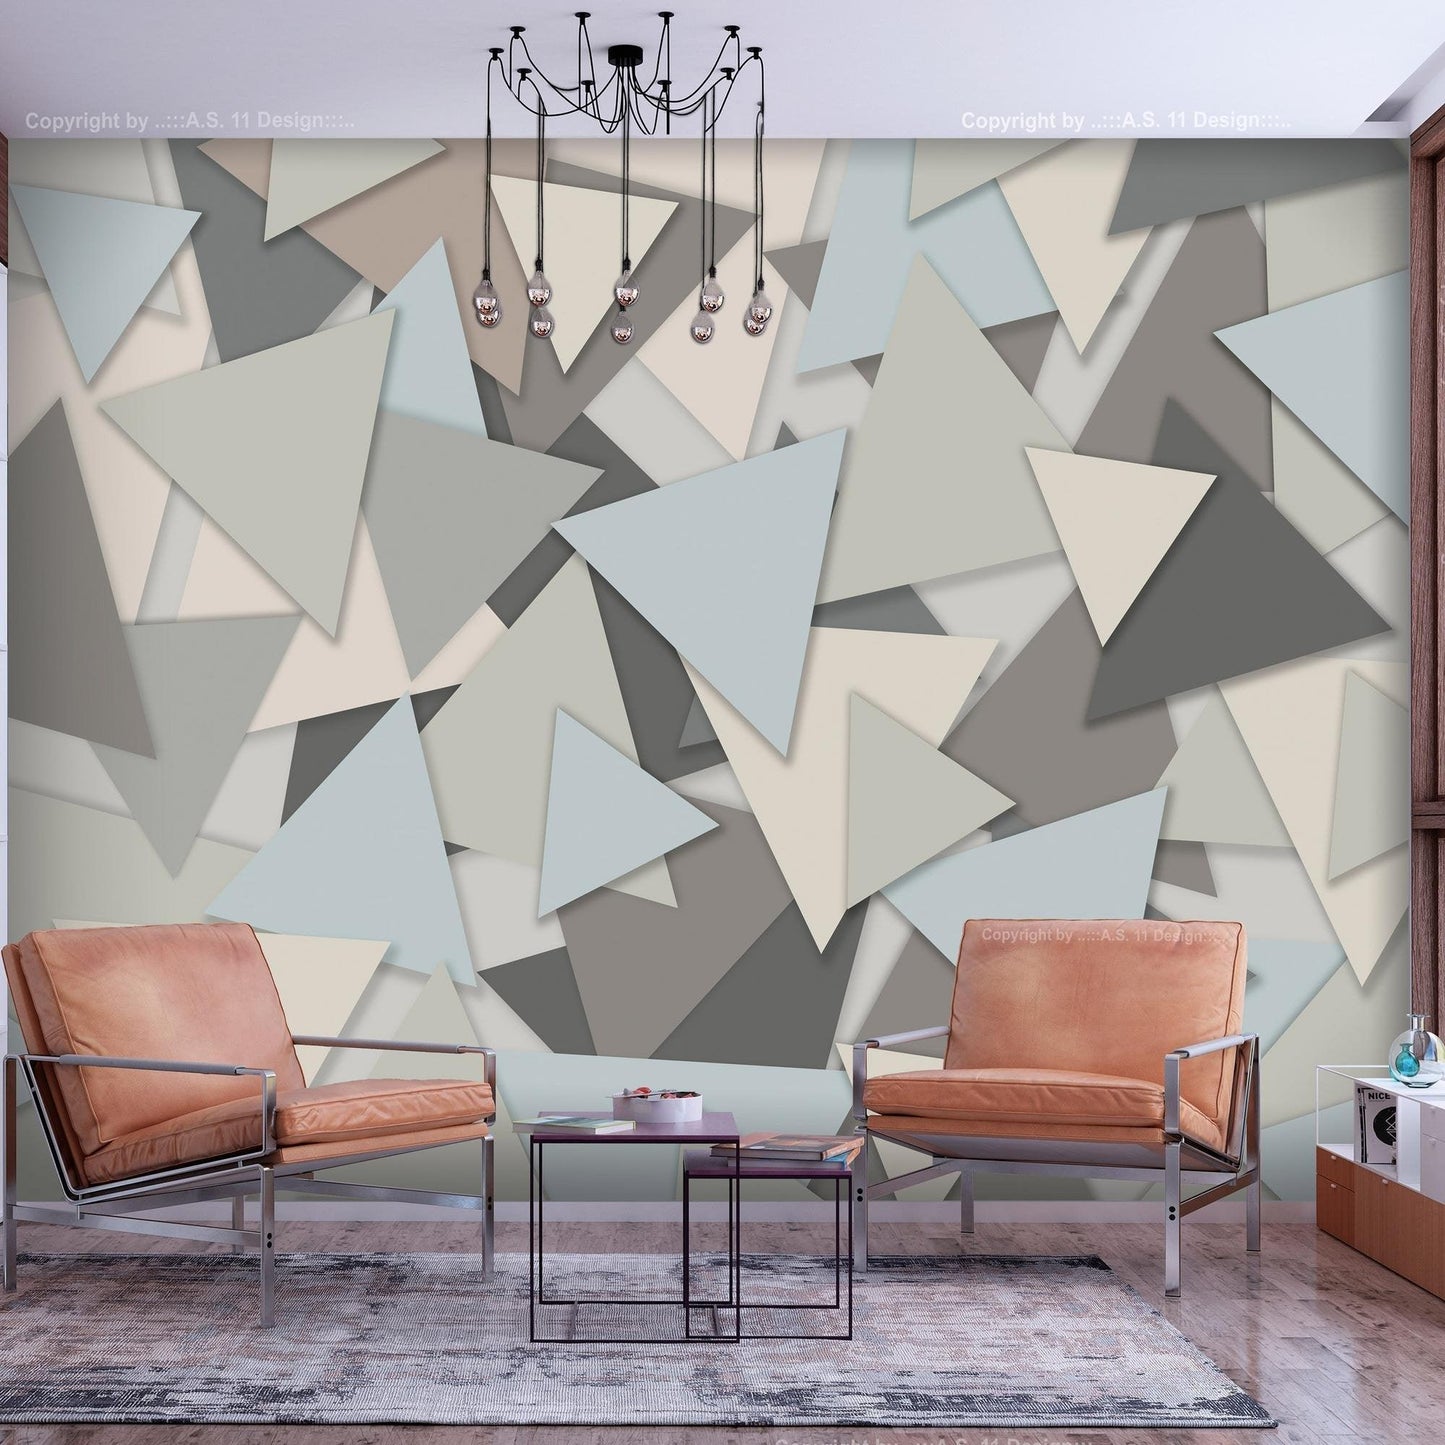 Peel and stick wall mural - Geometric Puzzle - www.trendingbestsellers.com